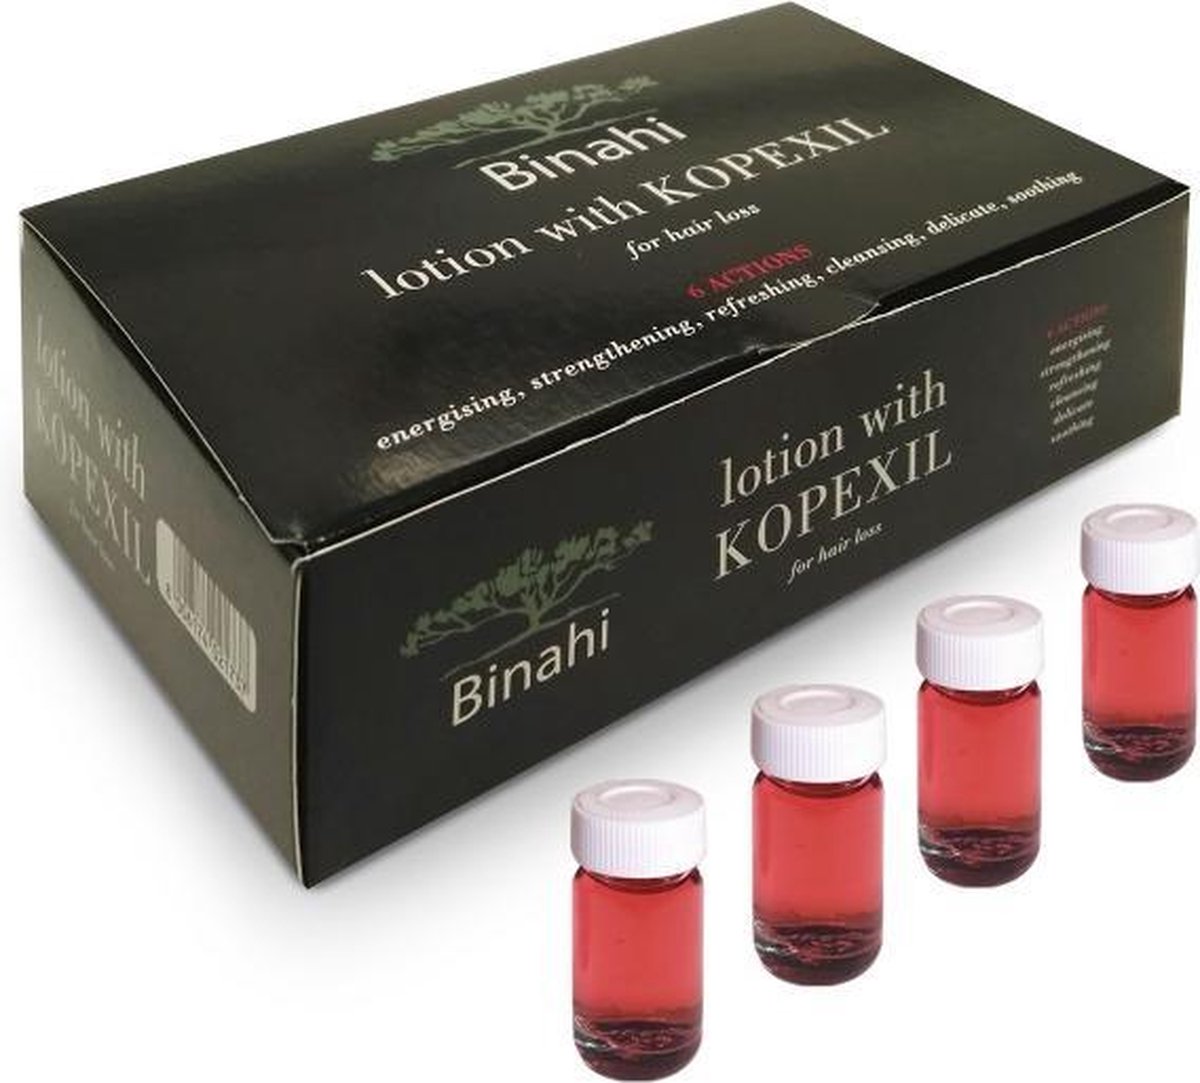 Binahi Lotion with kopexil ( 12 x 7 ML )